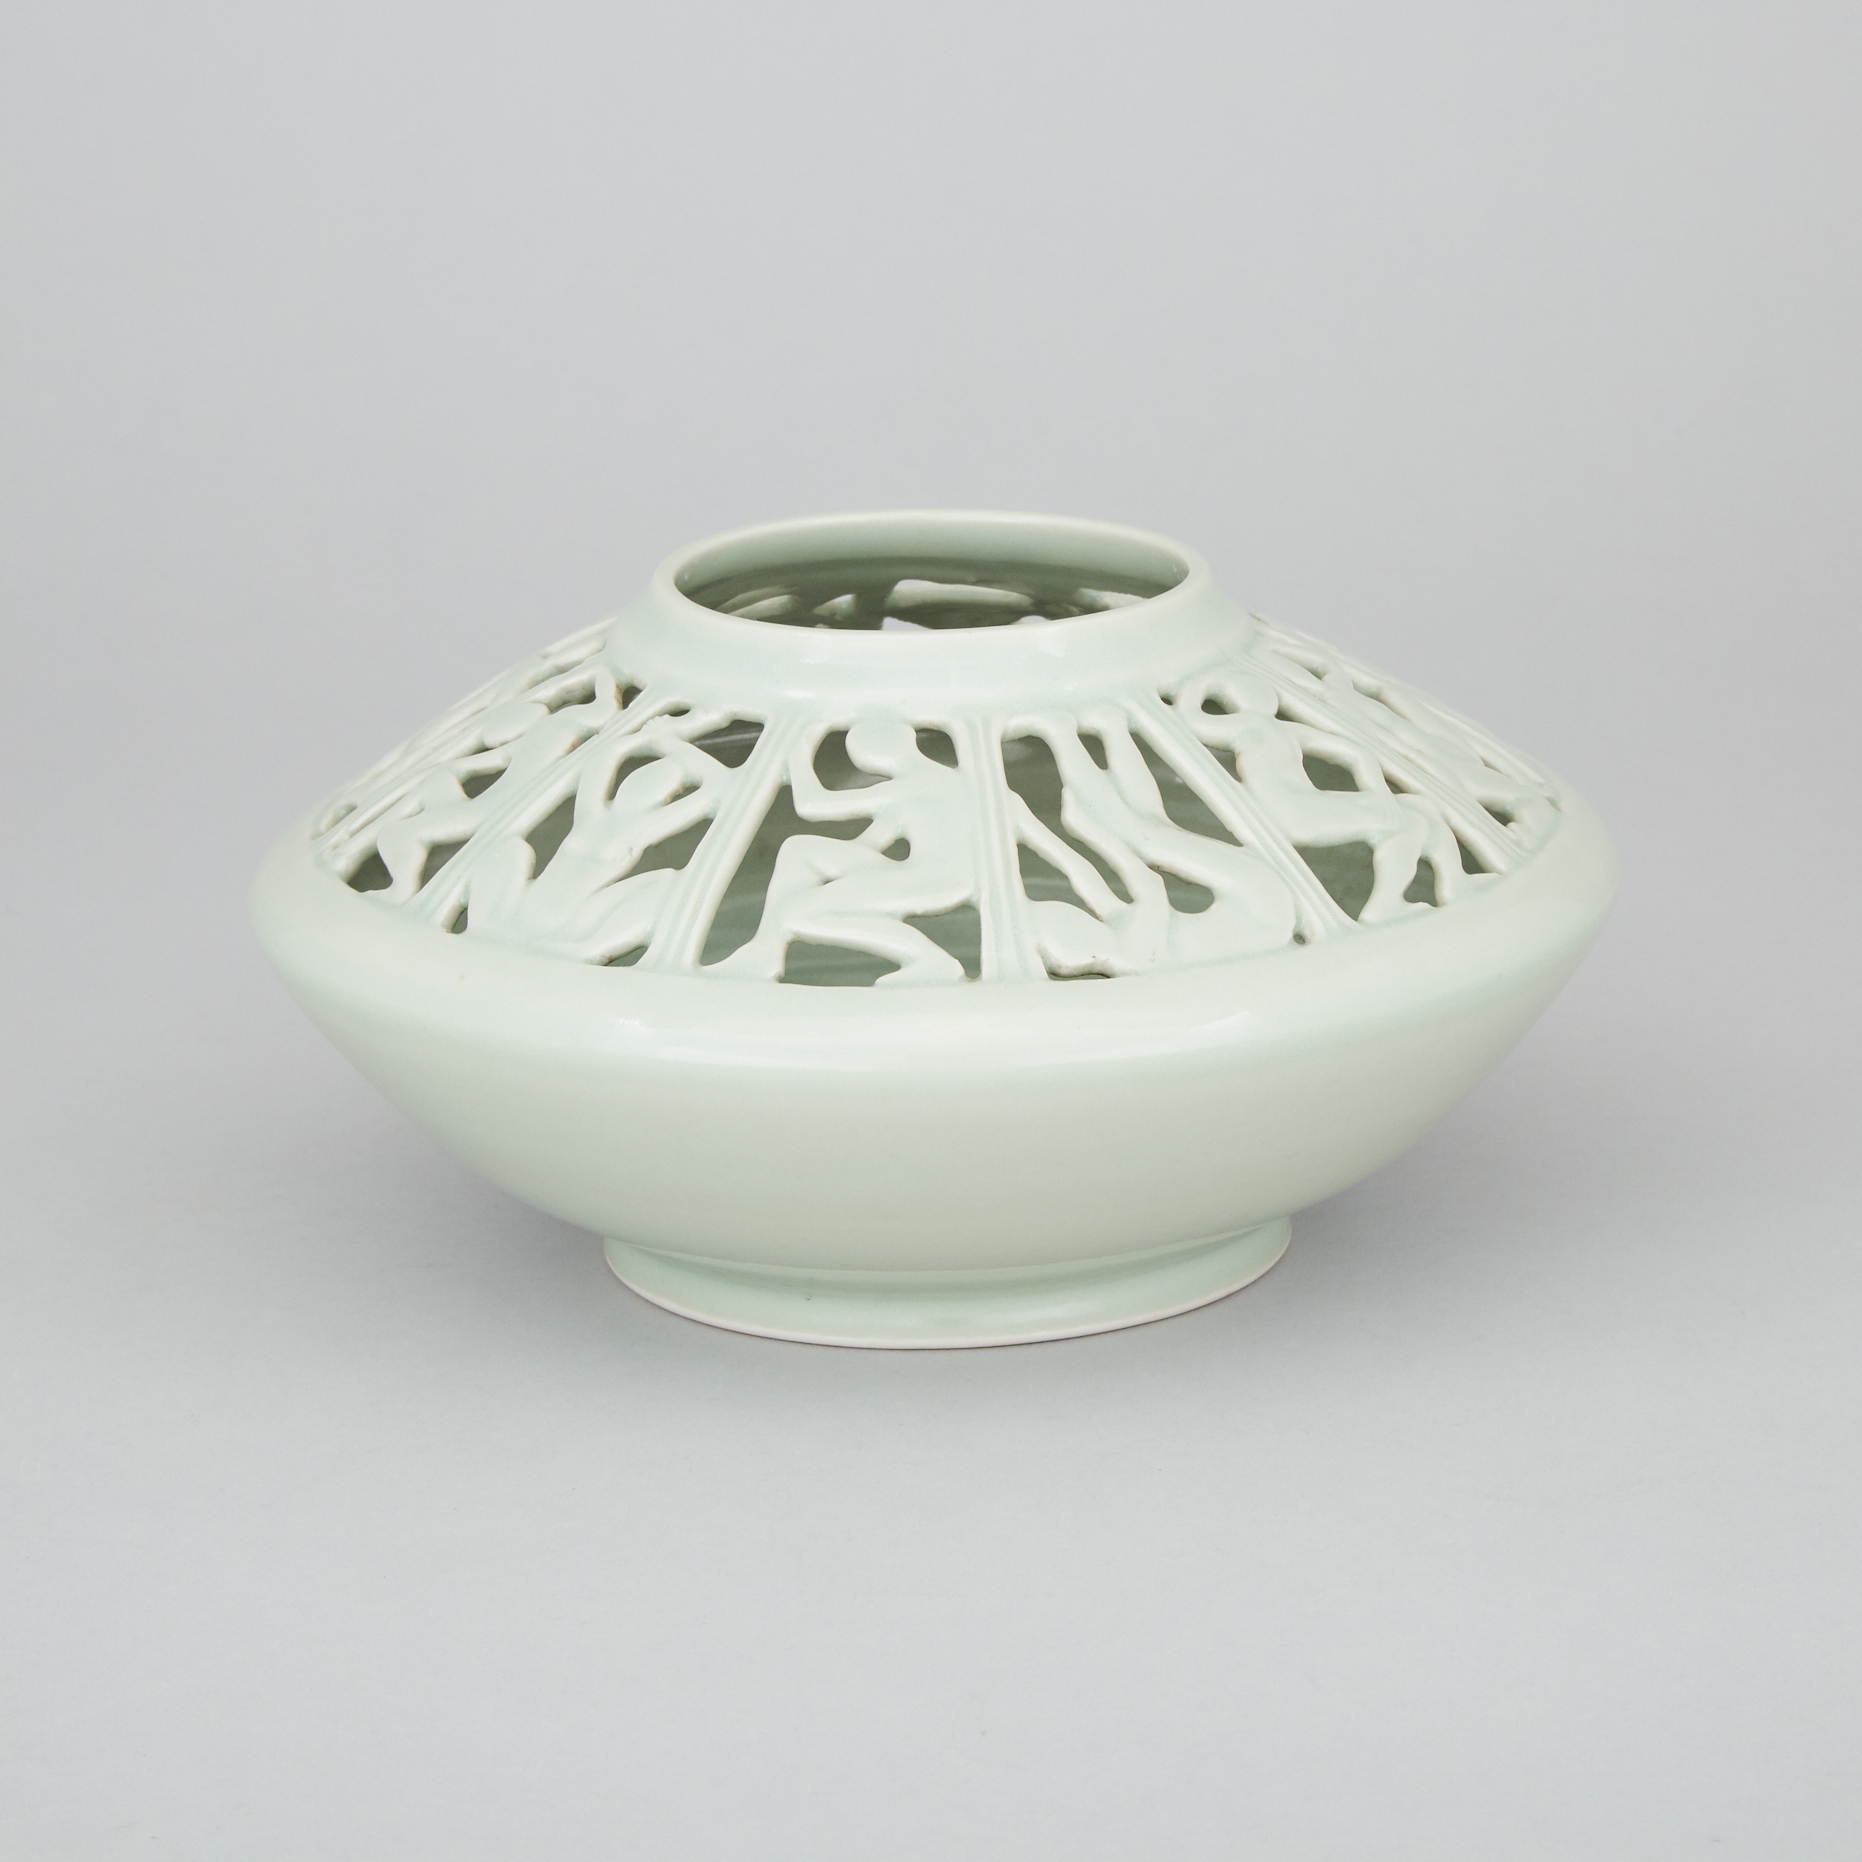 Don Wells (Canadian), Pierced Celadon Glazed Vase, 1993